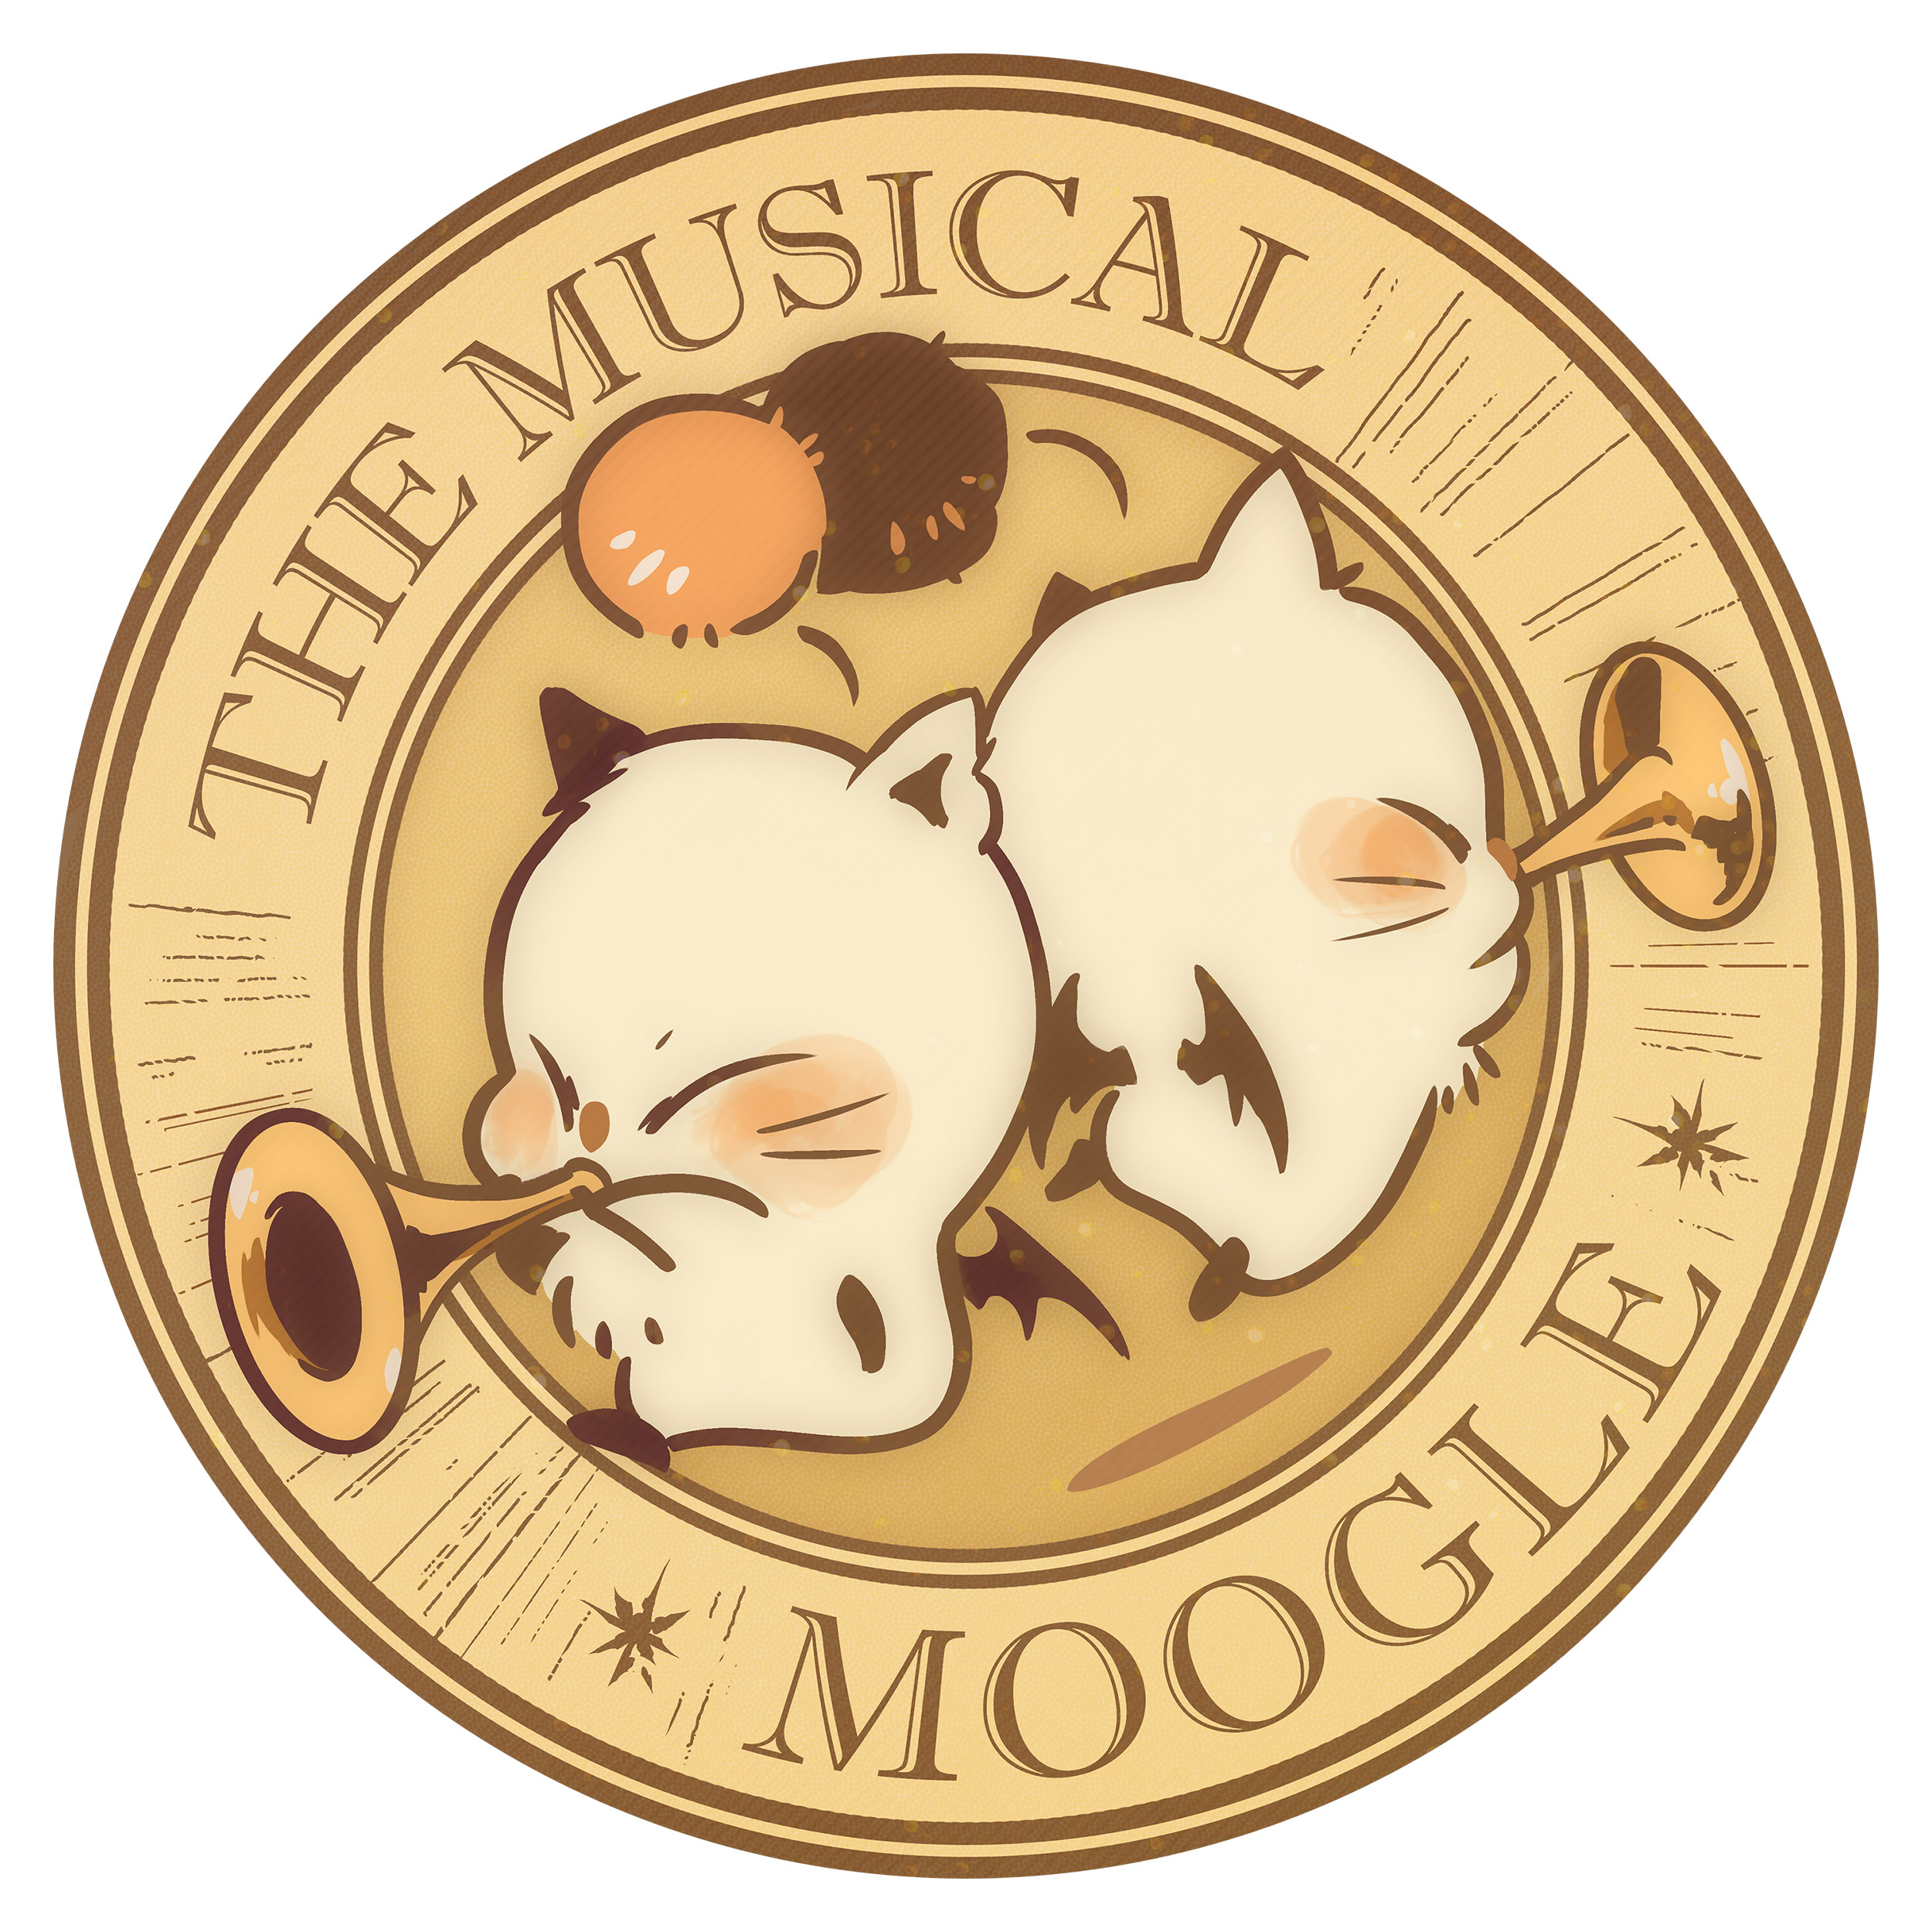 The Musical Moogle